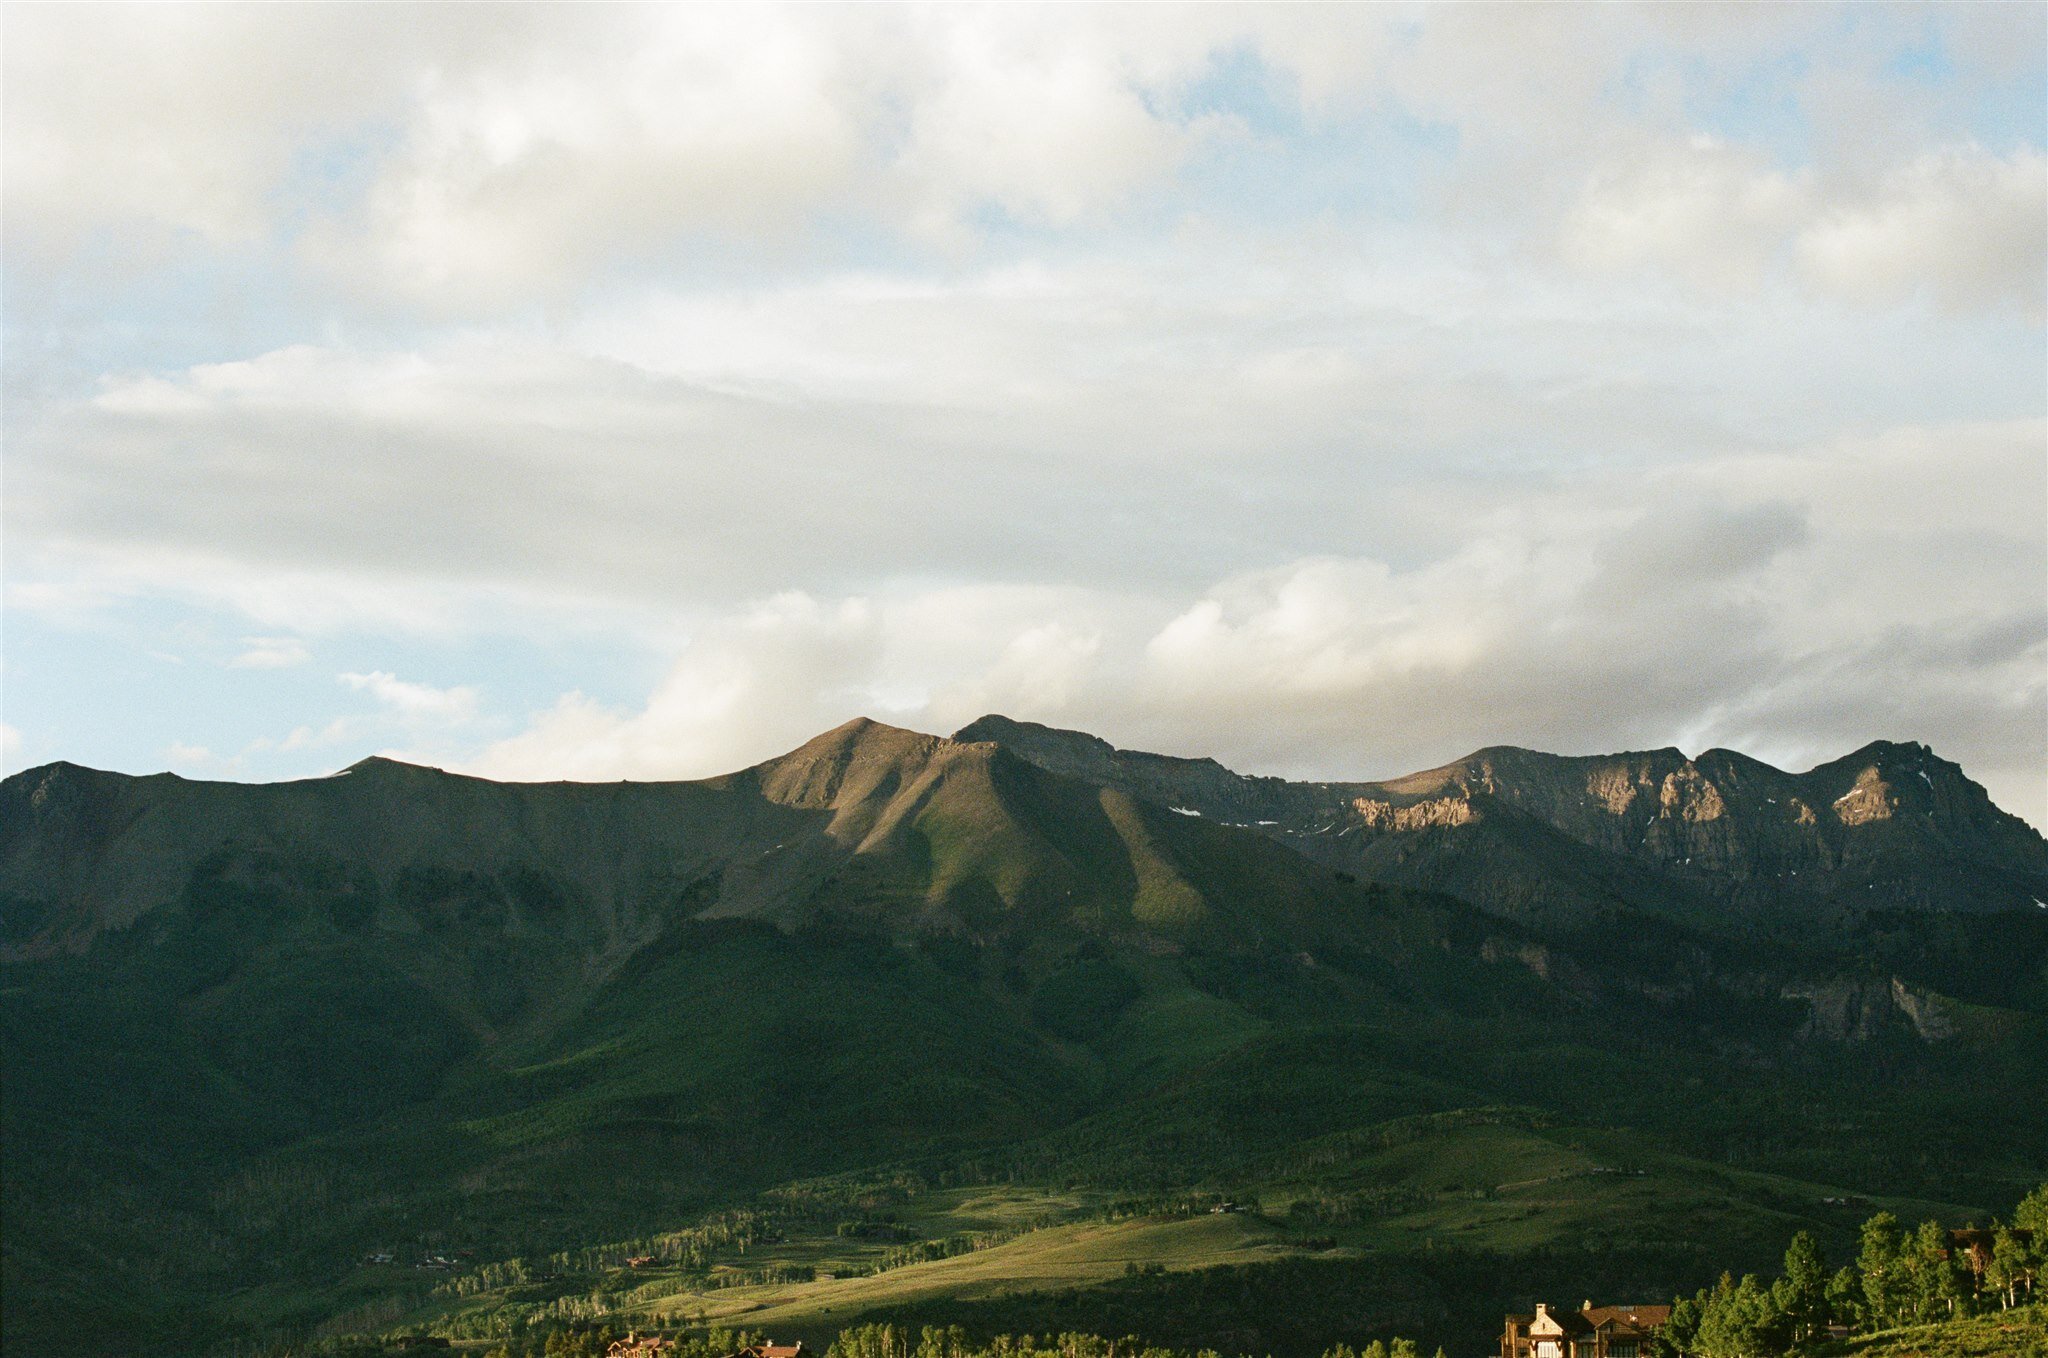  Sun shinning over the mountains in Telluride, Colorado 